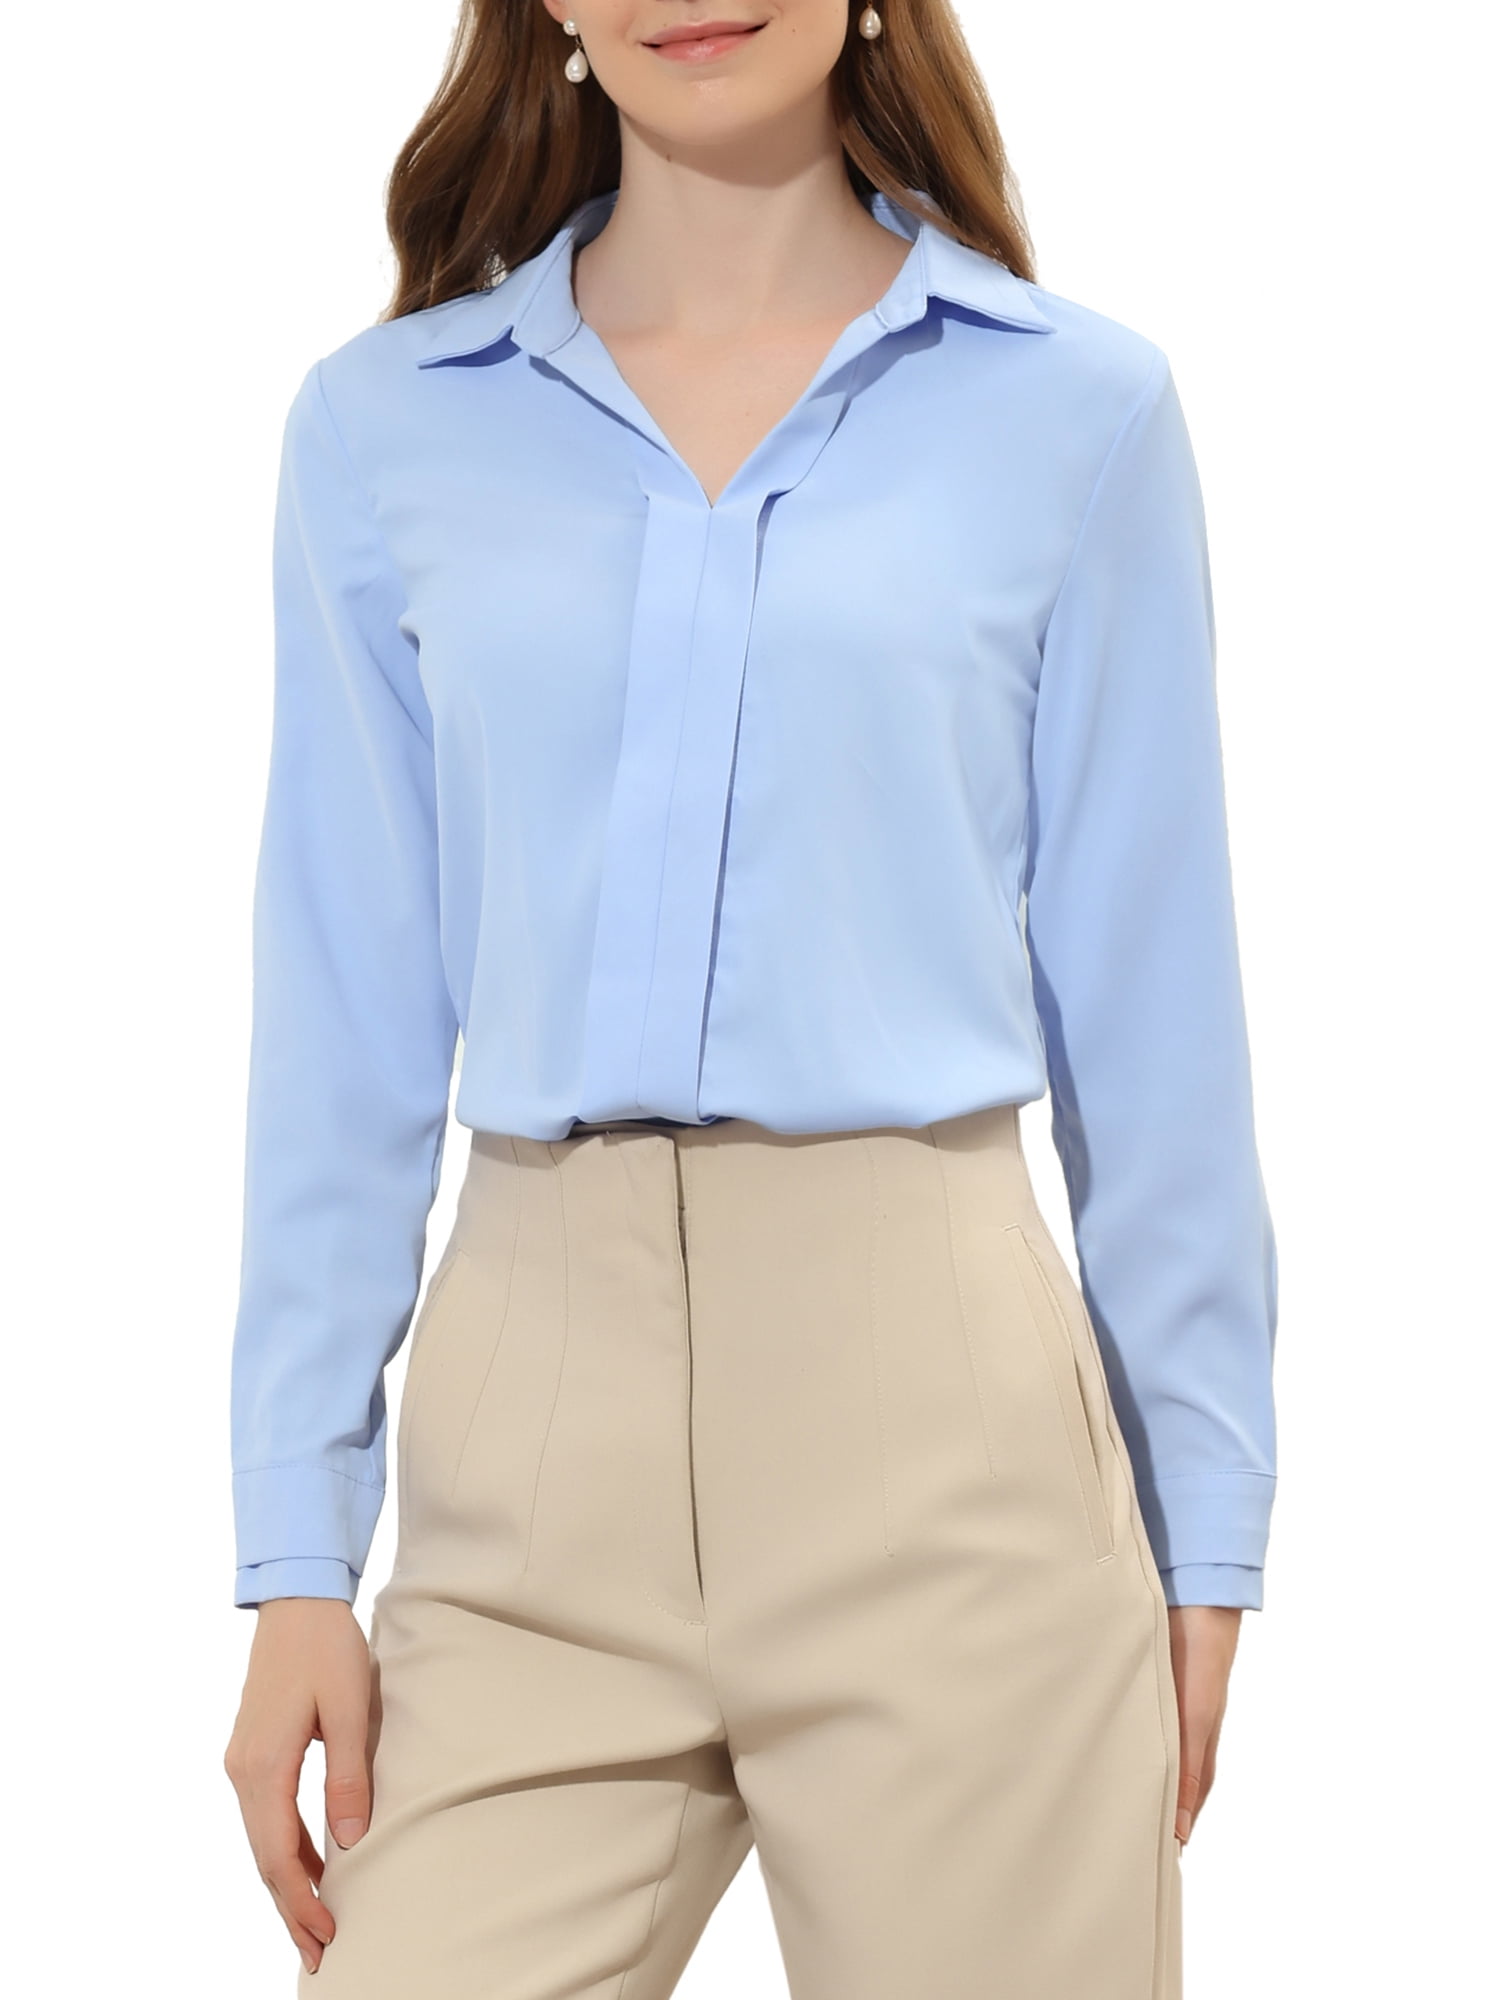 Unique Bargains Women's V Neck Classic Work Office Long Sleeve Shirt